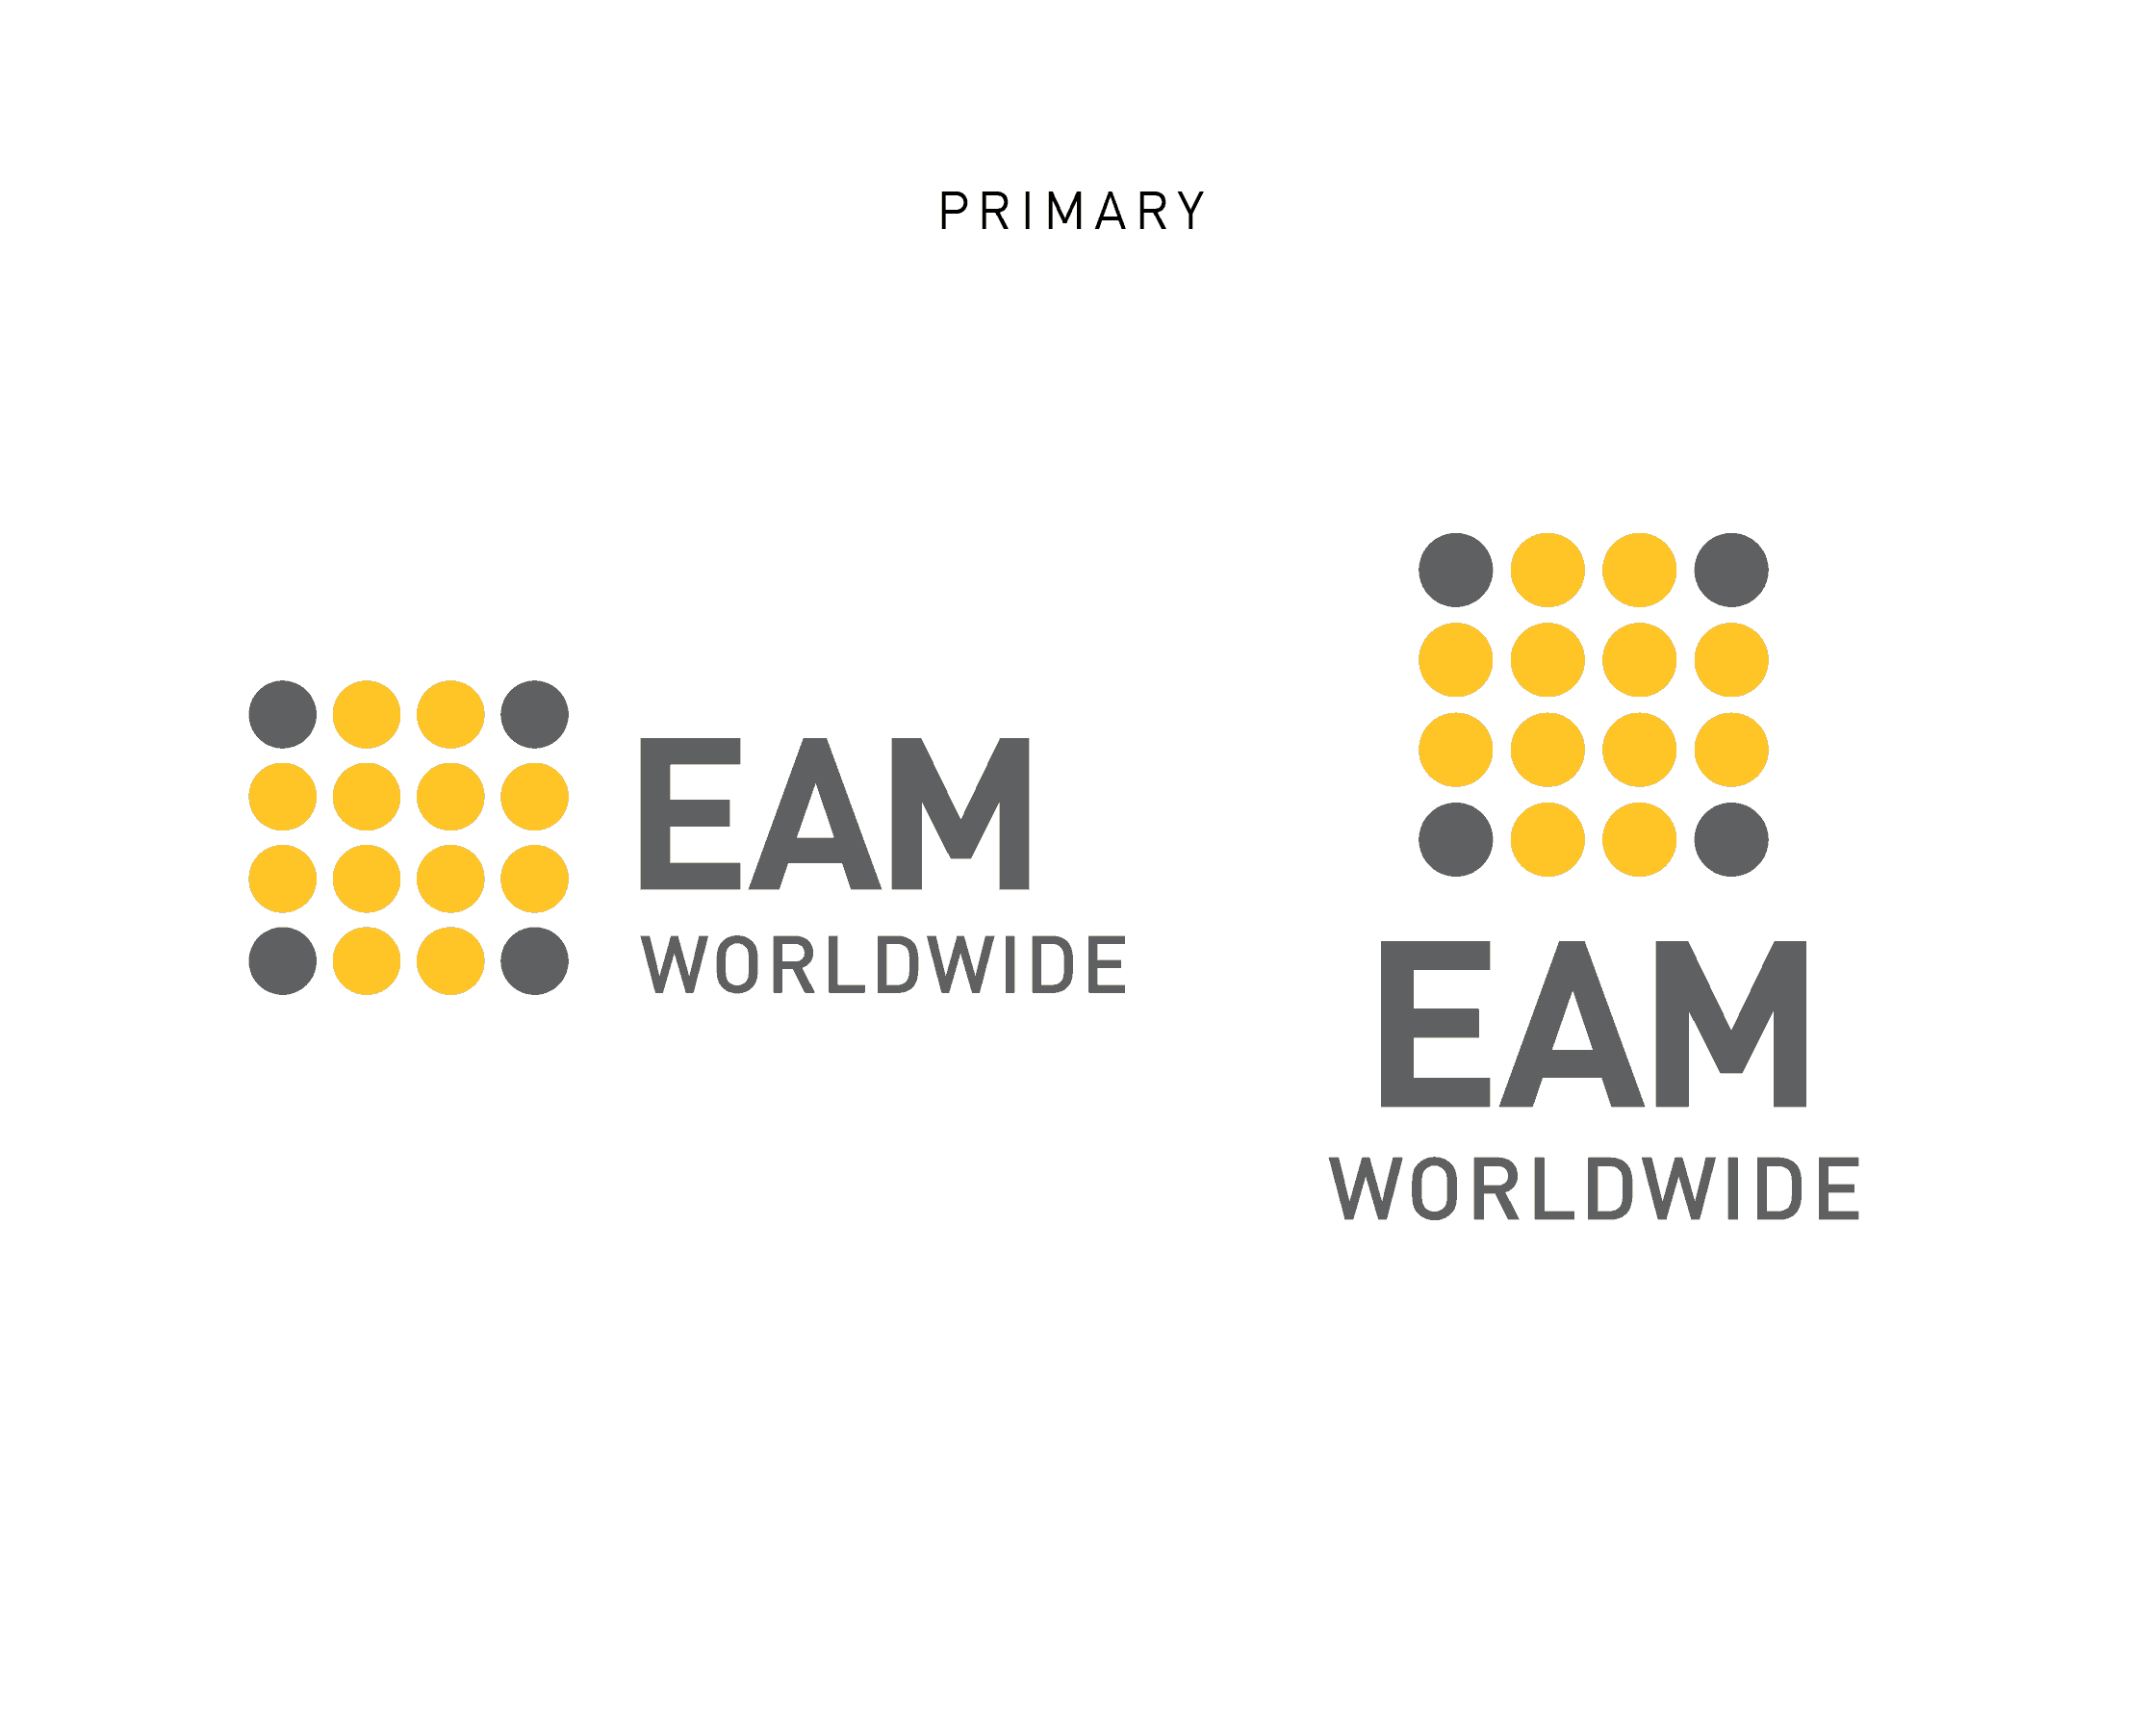 EAM Worldwide primary logo usage